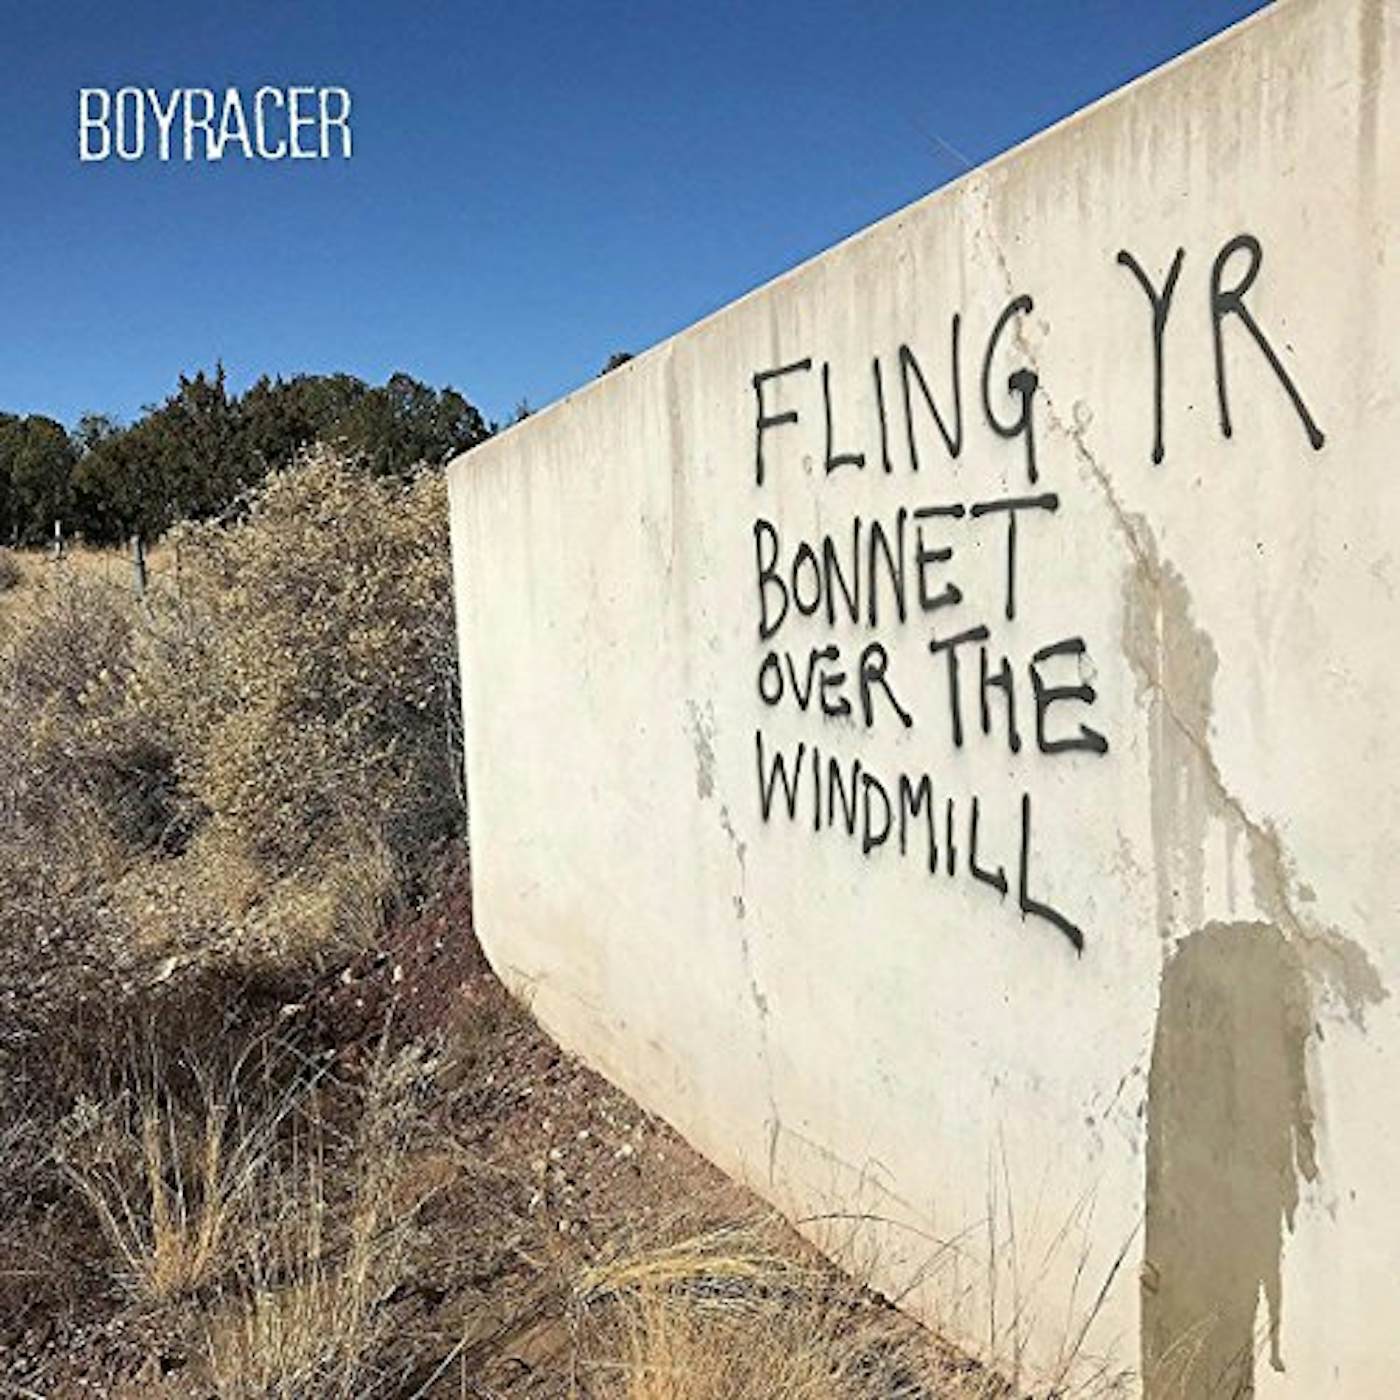 Boyracer Fling Yr Bonnet Over The Windmill Vinyl Record